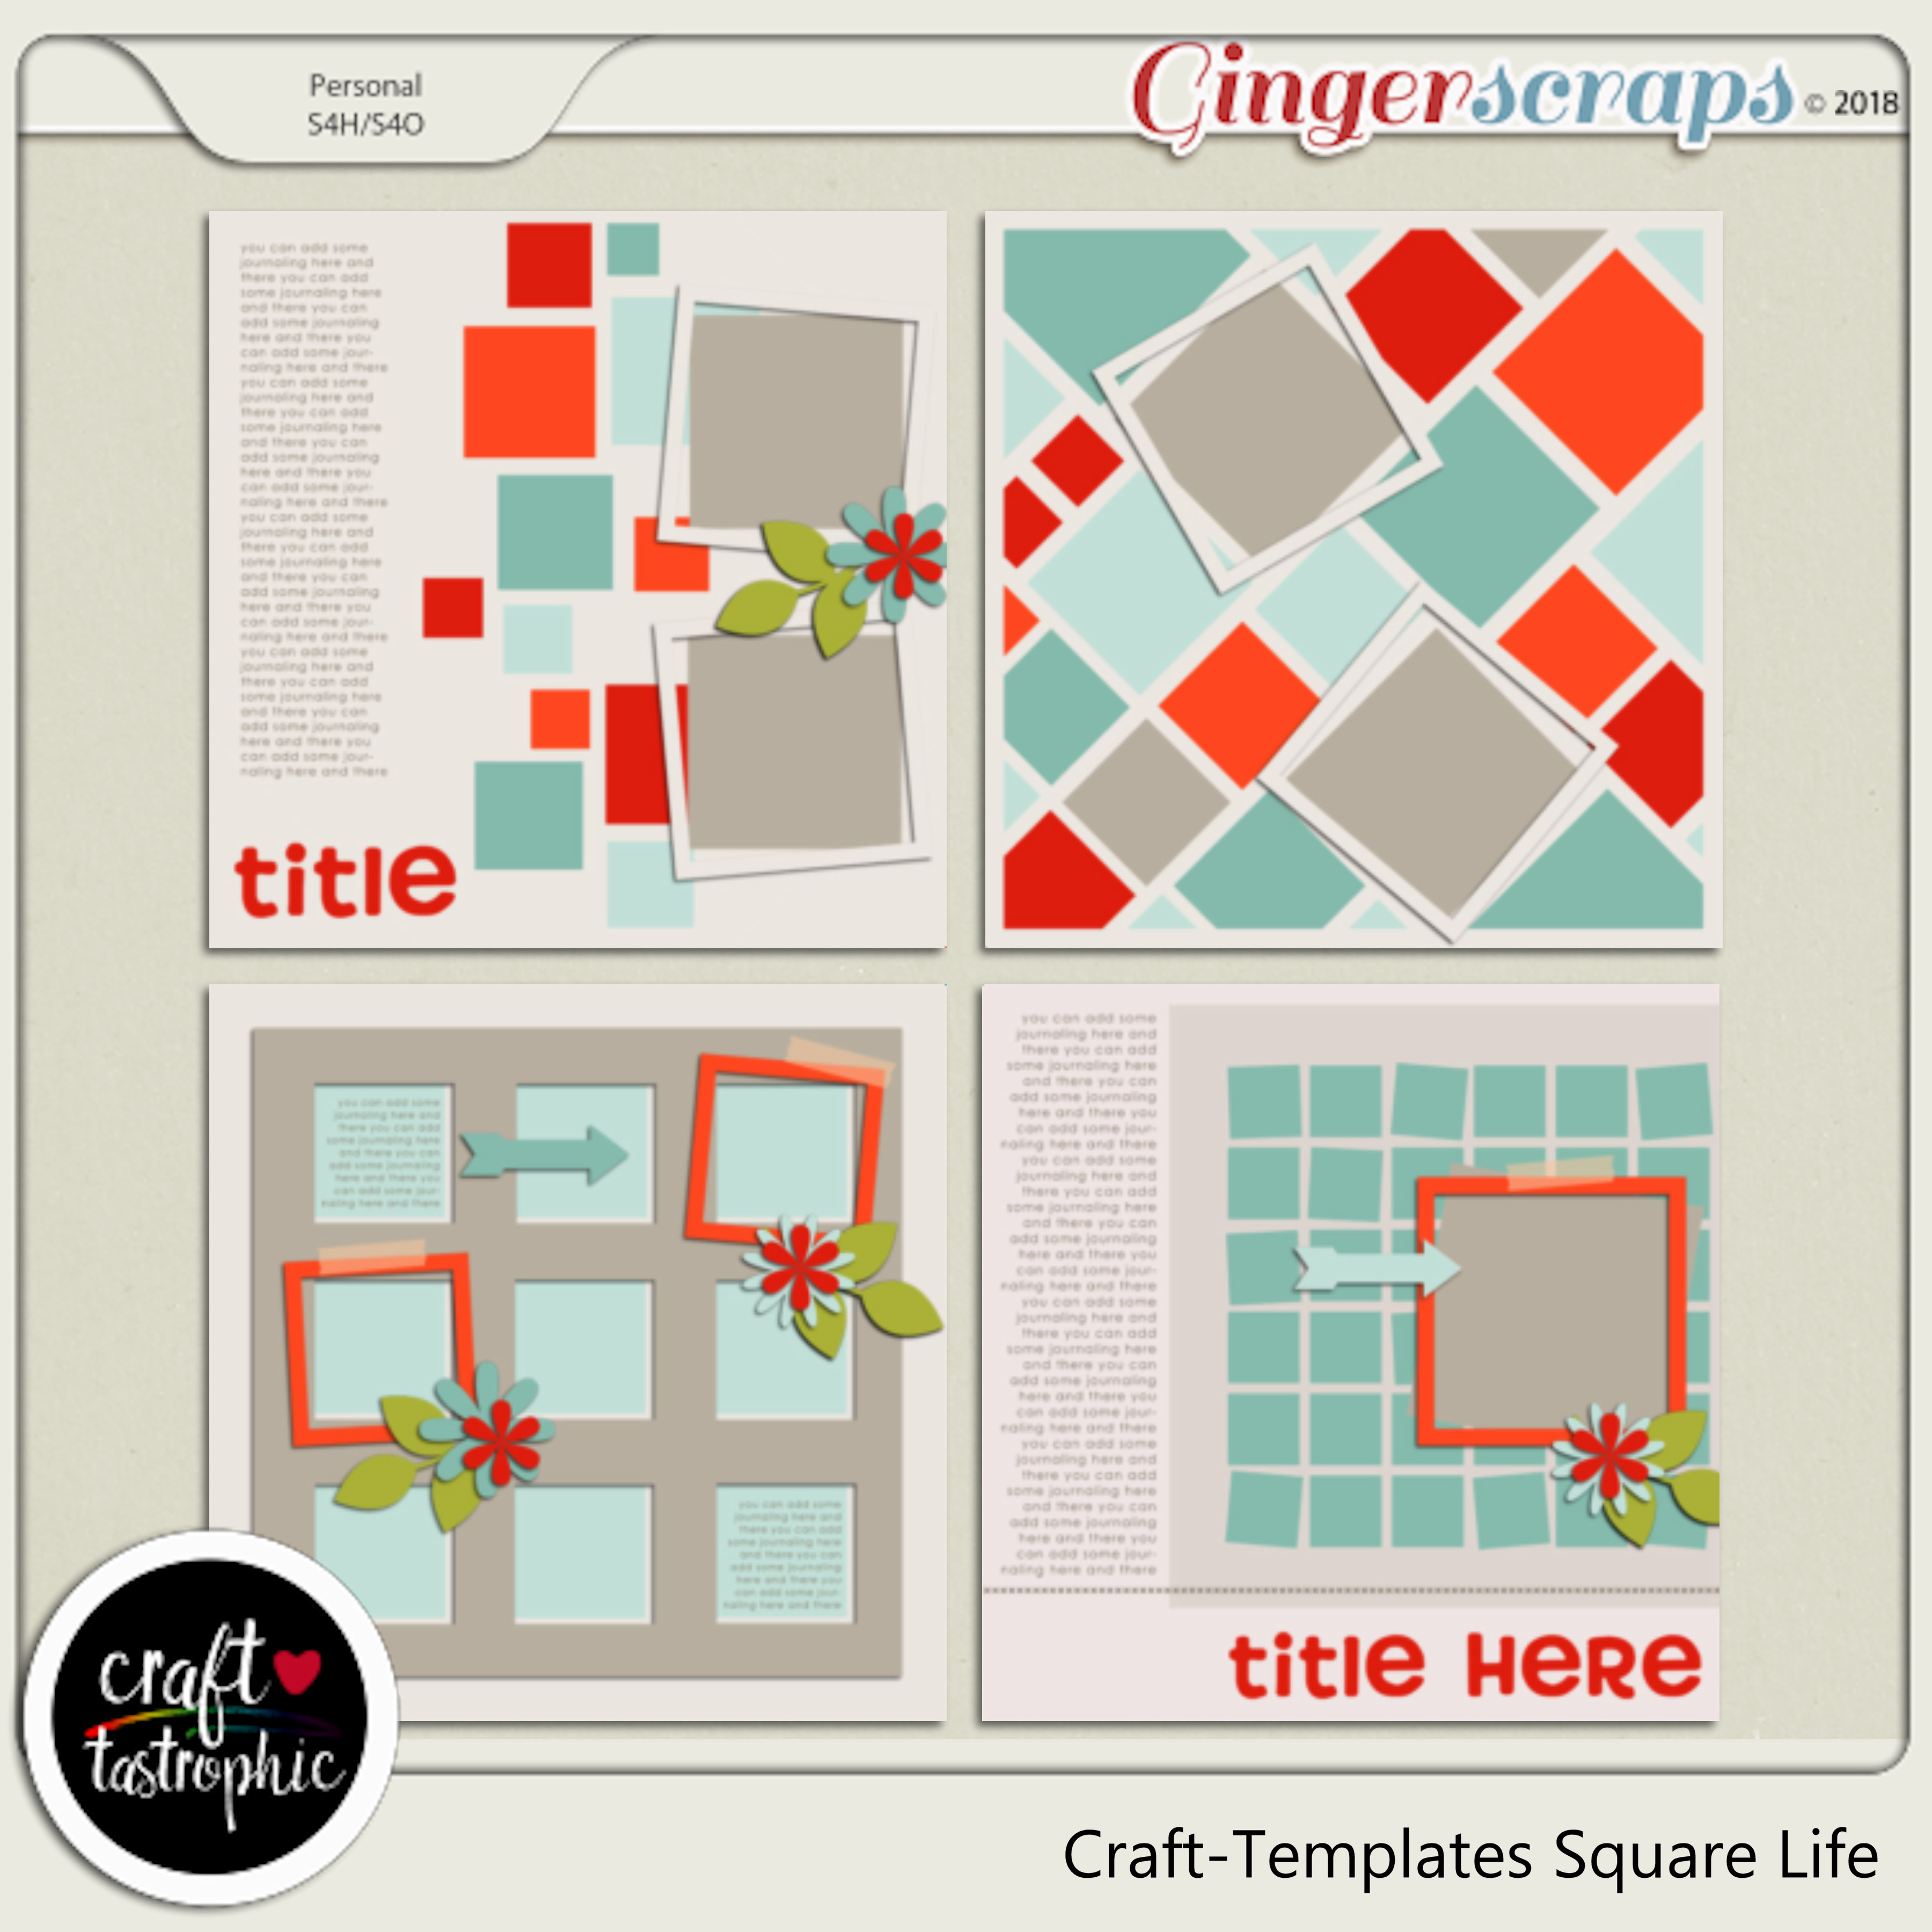 Craft-Templates Square Life